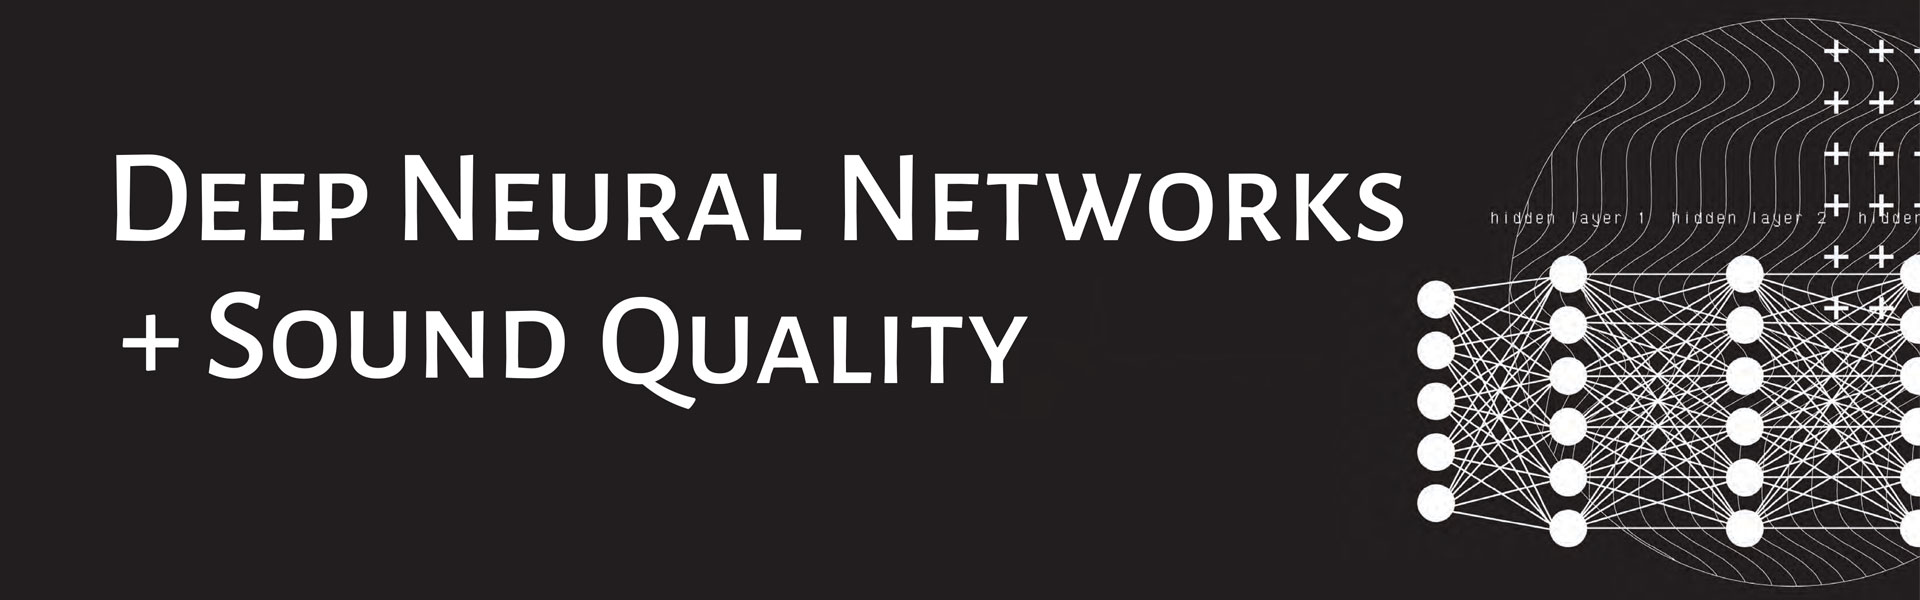 Deep Neural Networks + Sound Quality